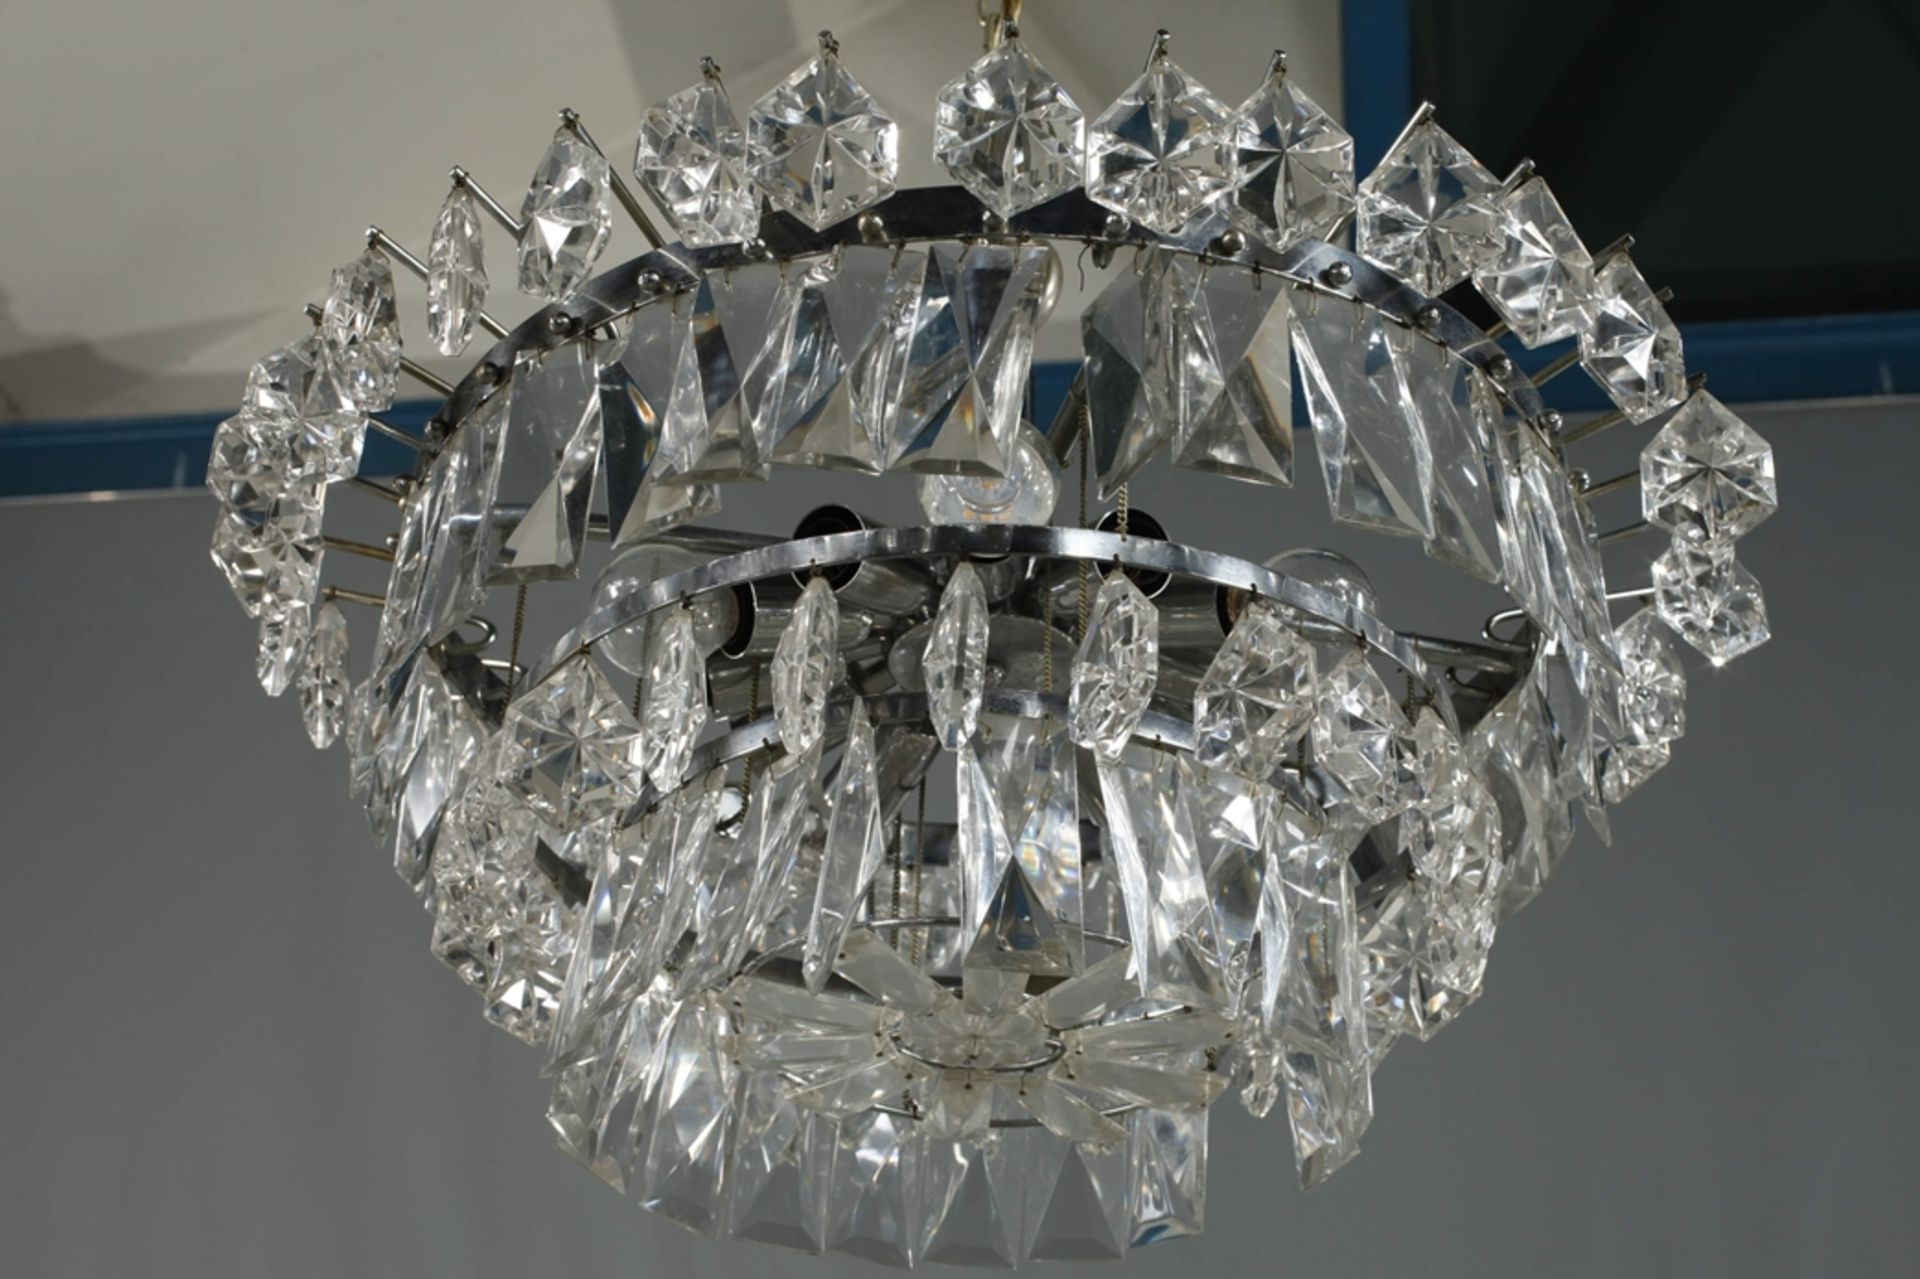 Ceiling lamp design - Image 3 of 6